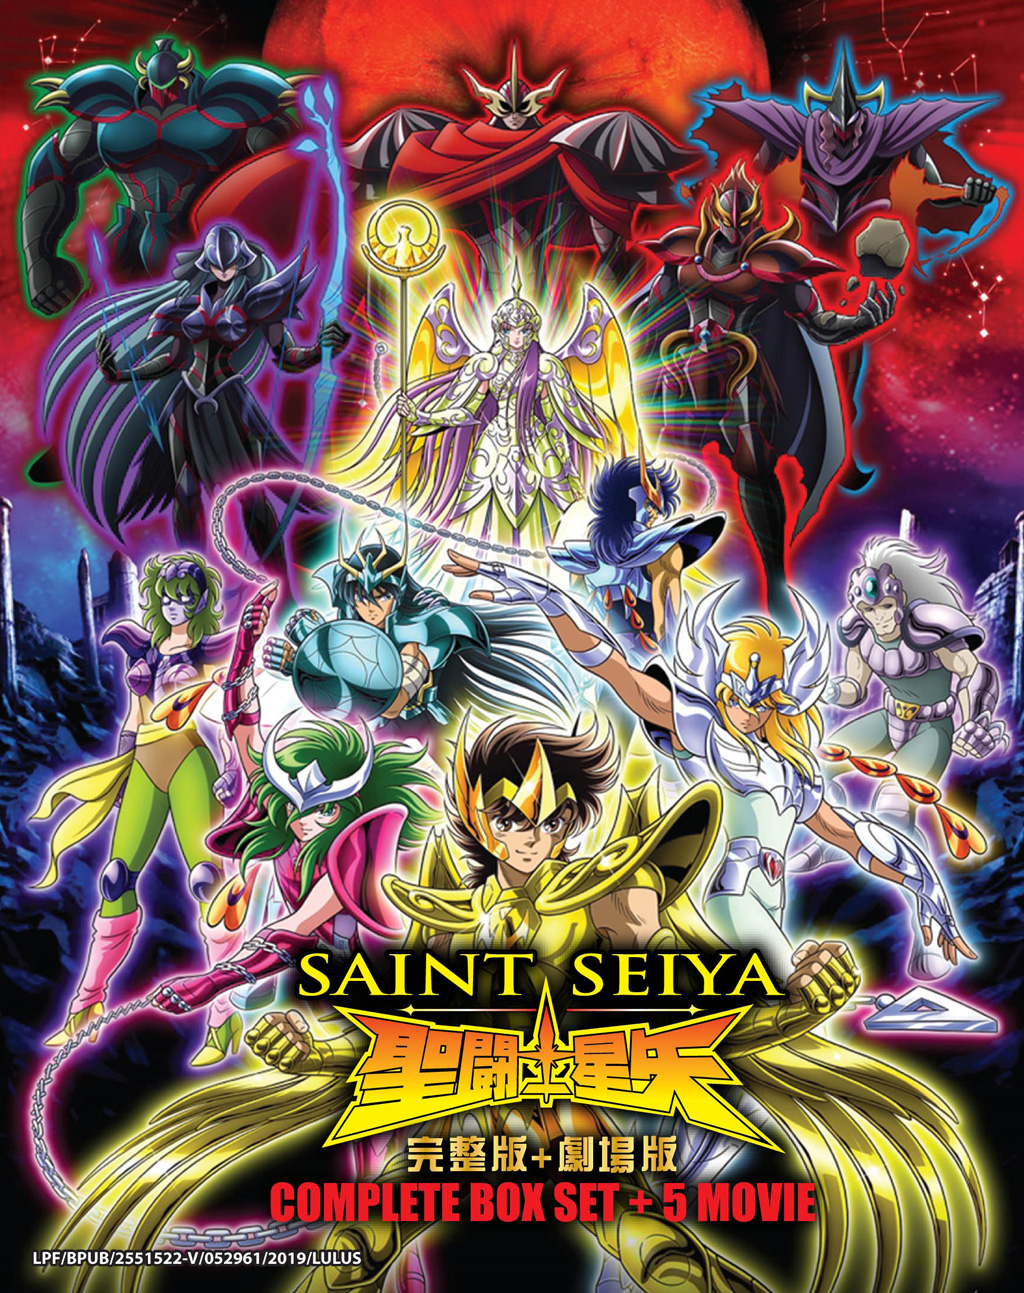 Saint Seiya Complete Box Set + 5 Movie